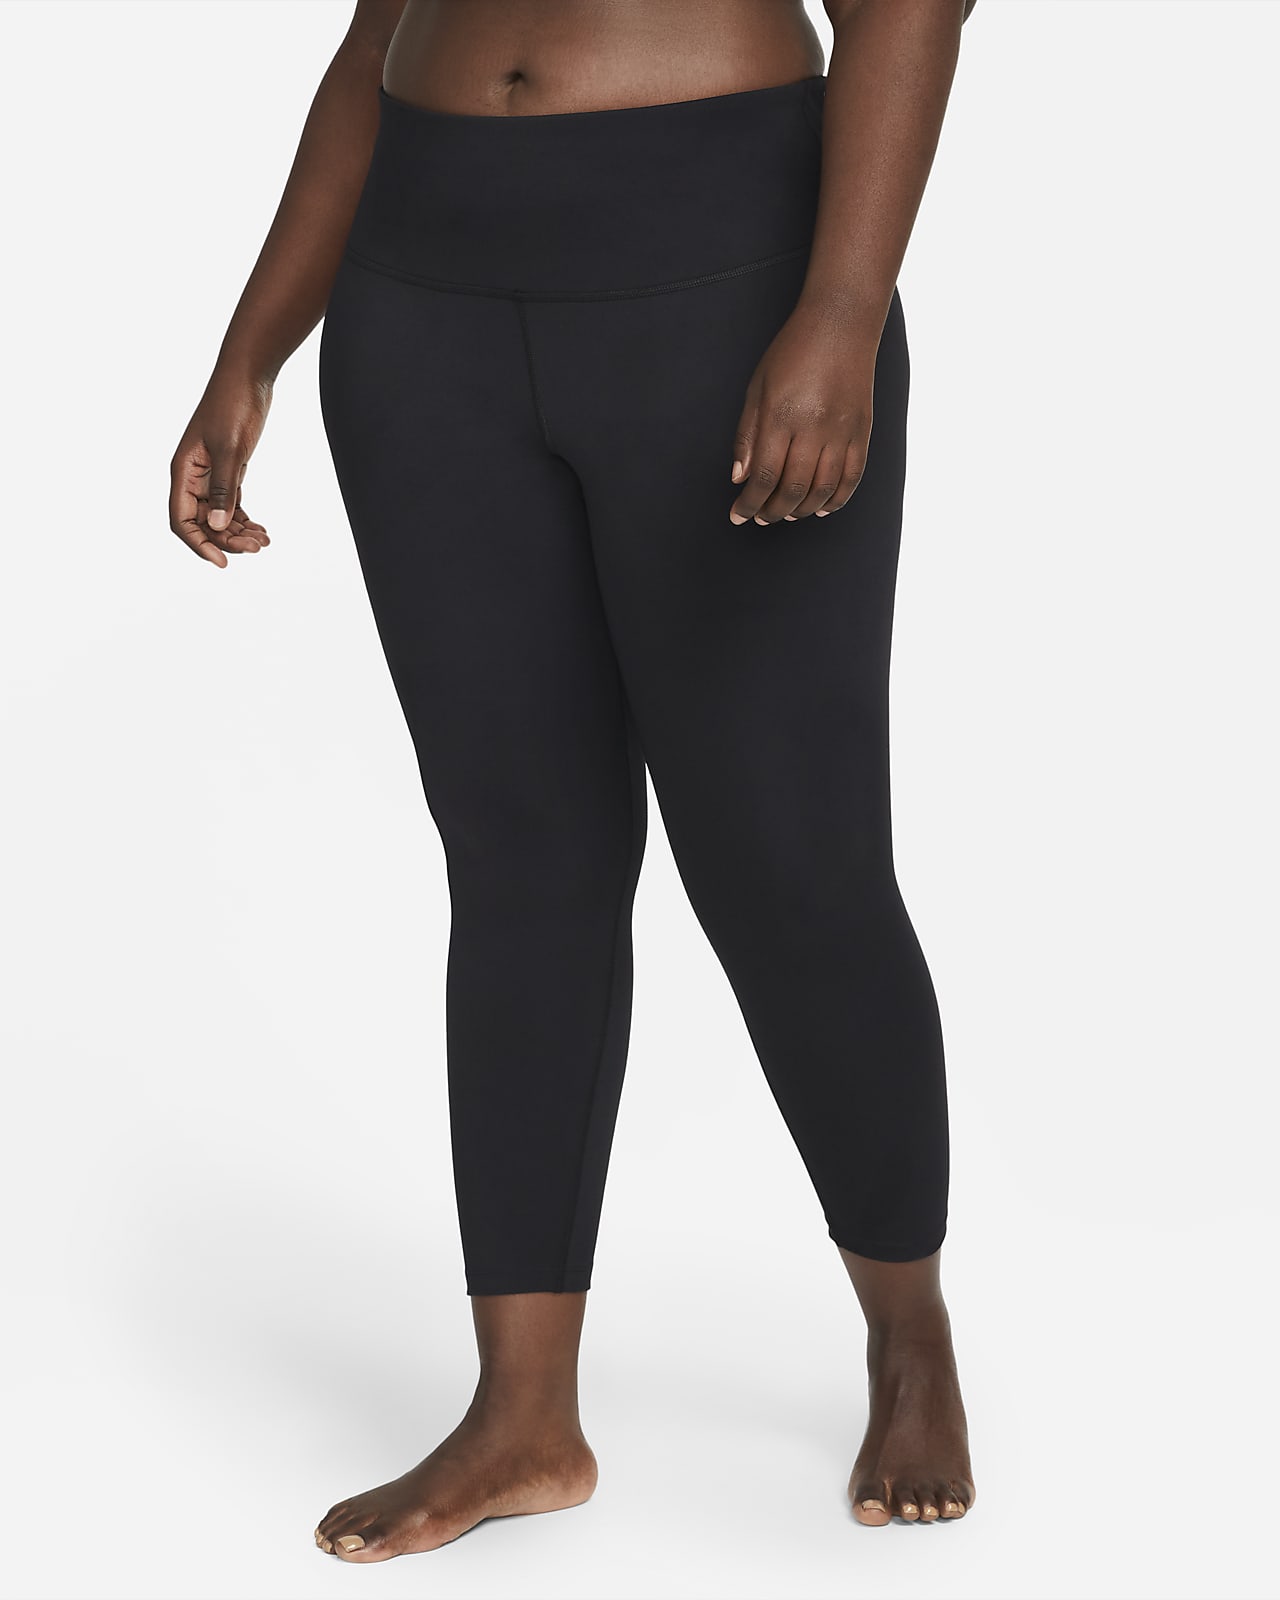 Nike Yoga Leggings de 7/8 de talle alto (Talla grande) - Mujer